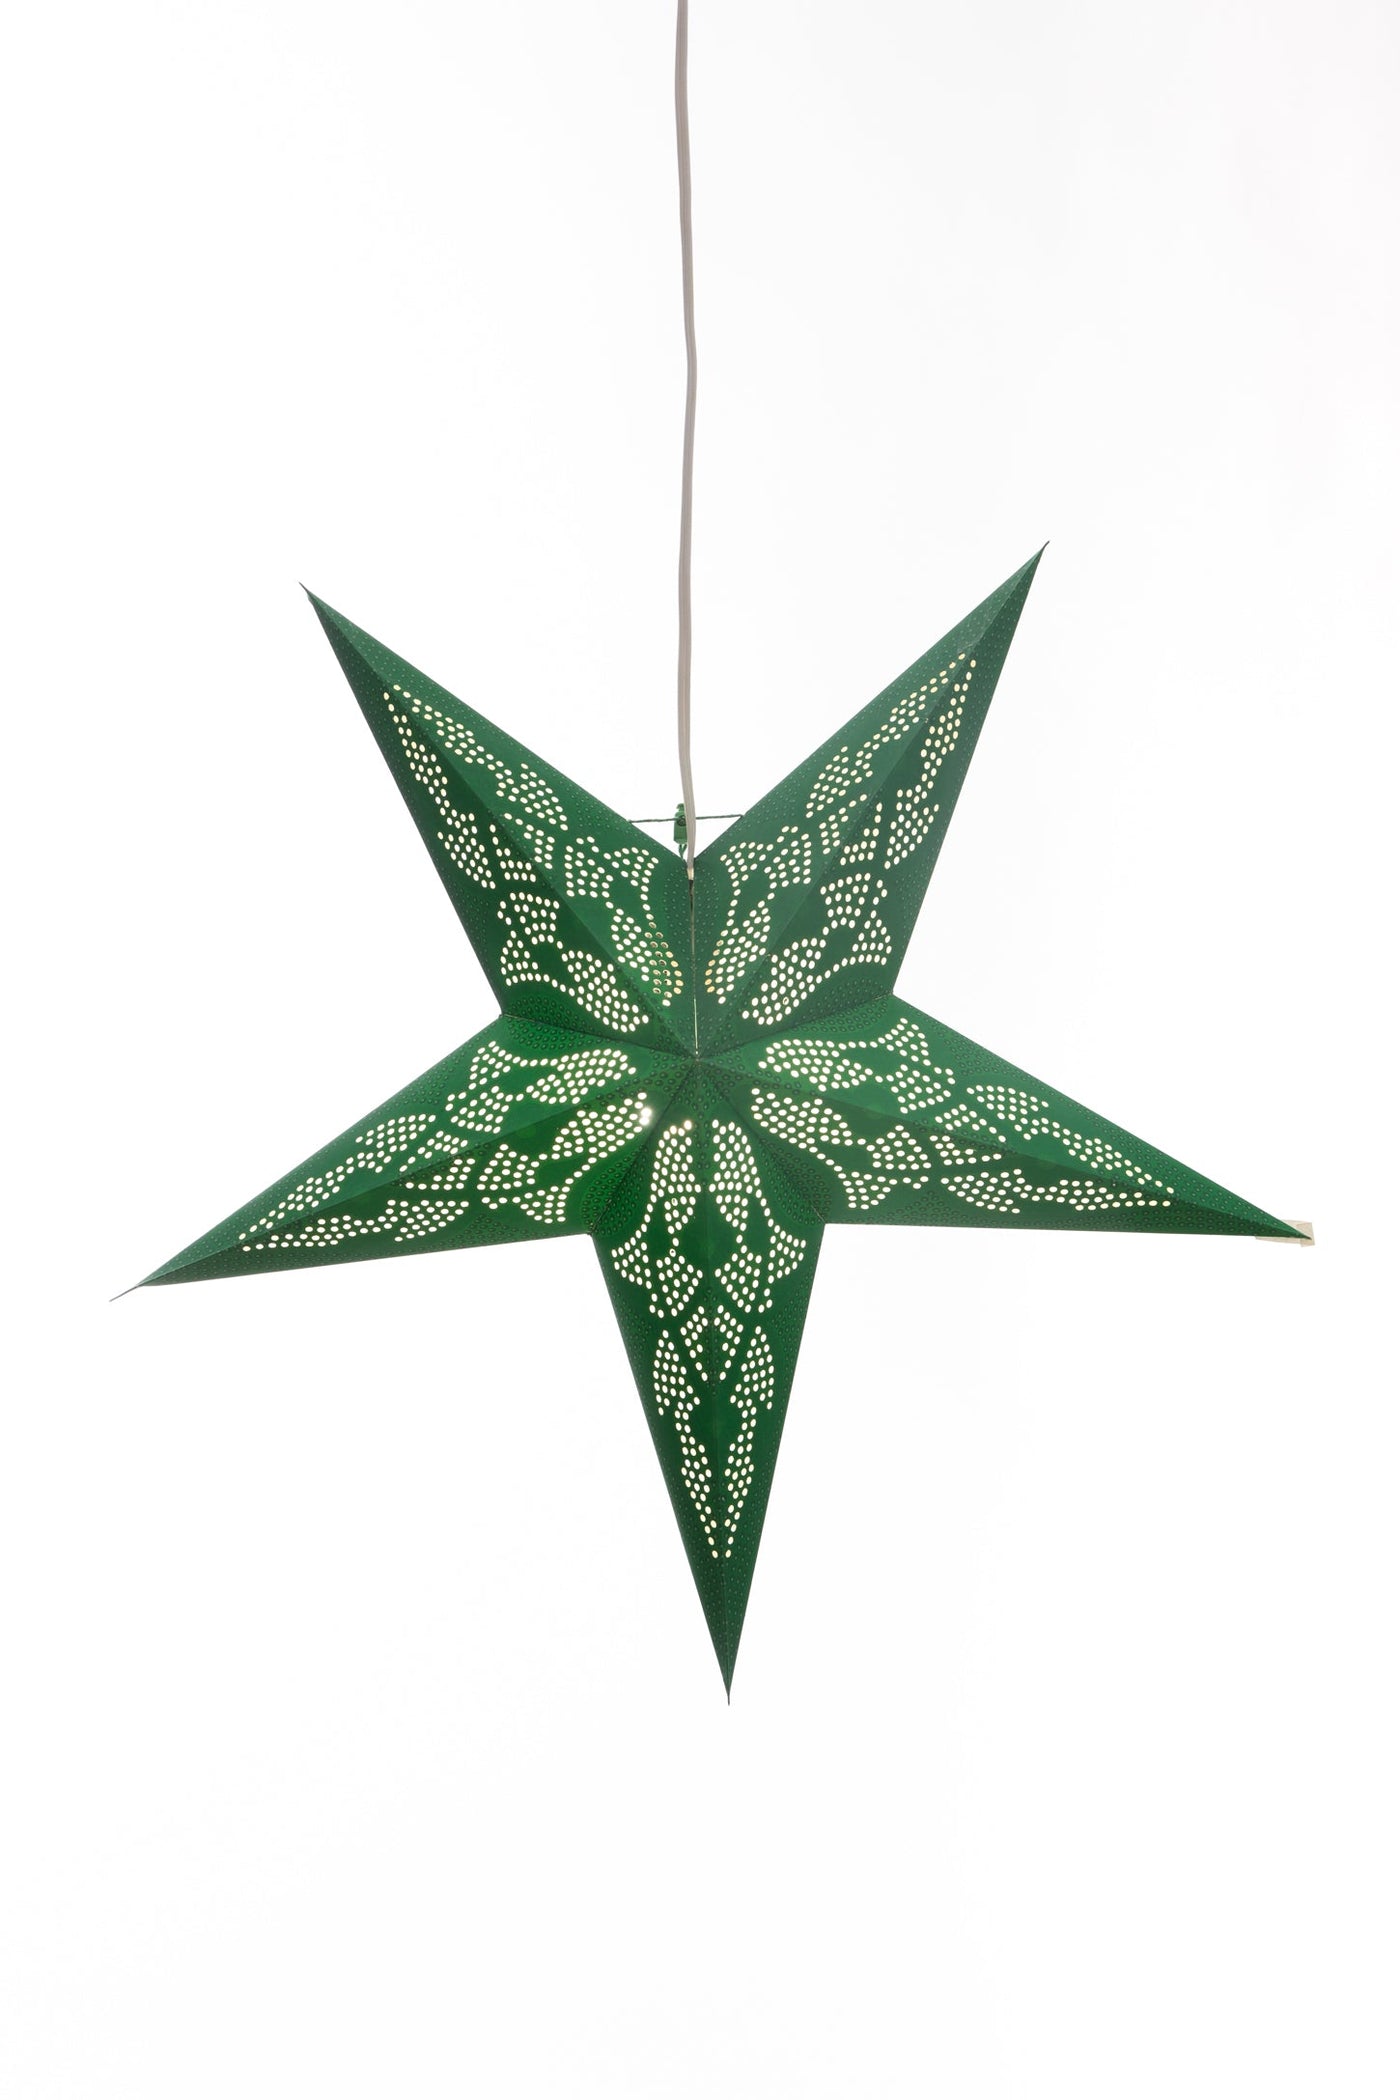 Green Star Paper Lantern